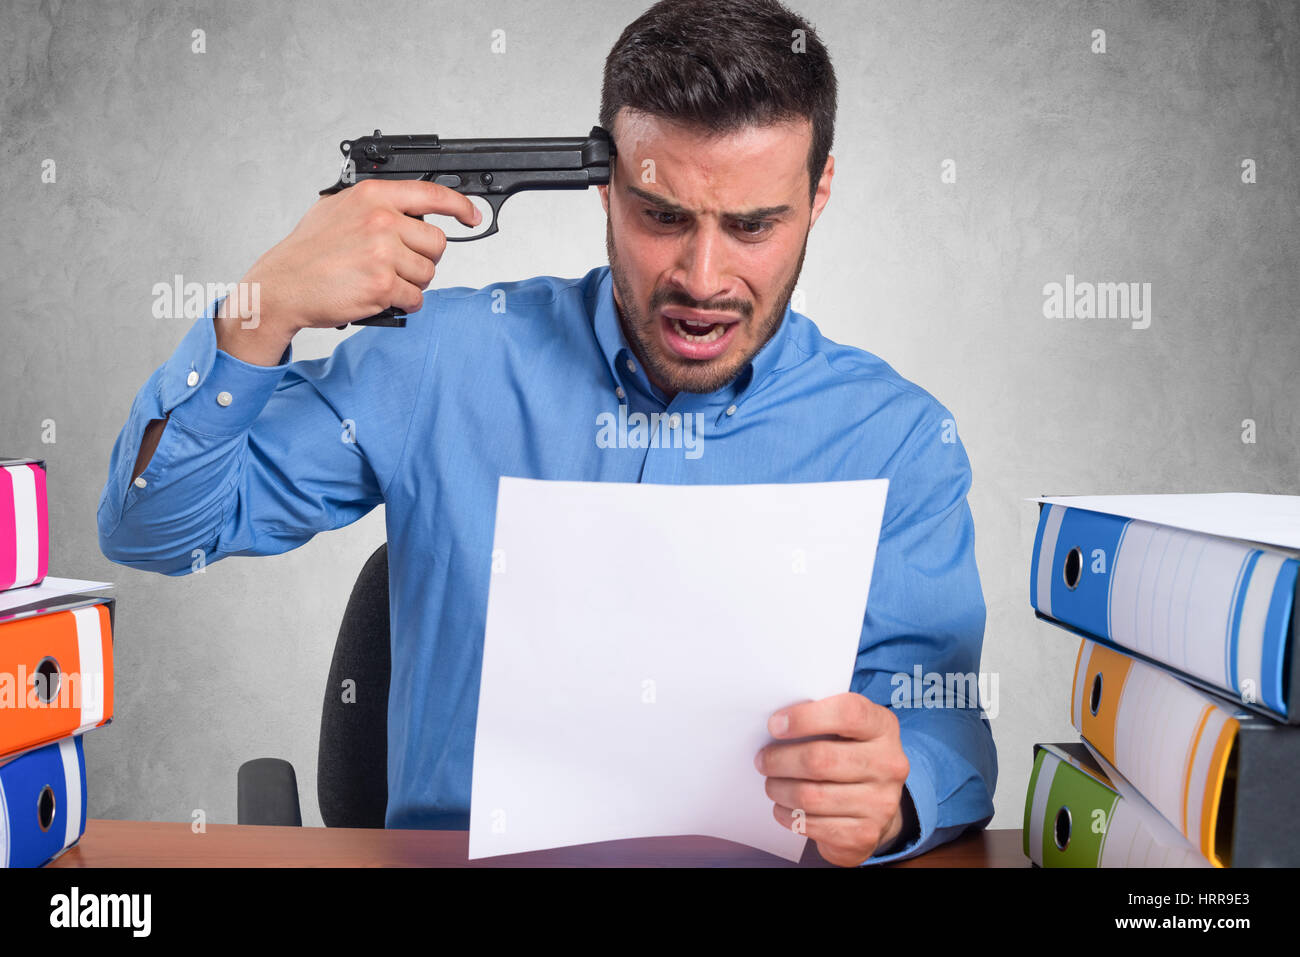 Businessman pointing a gun to his head Stock Photo